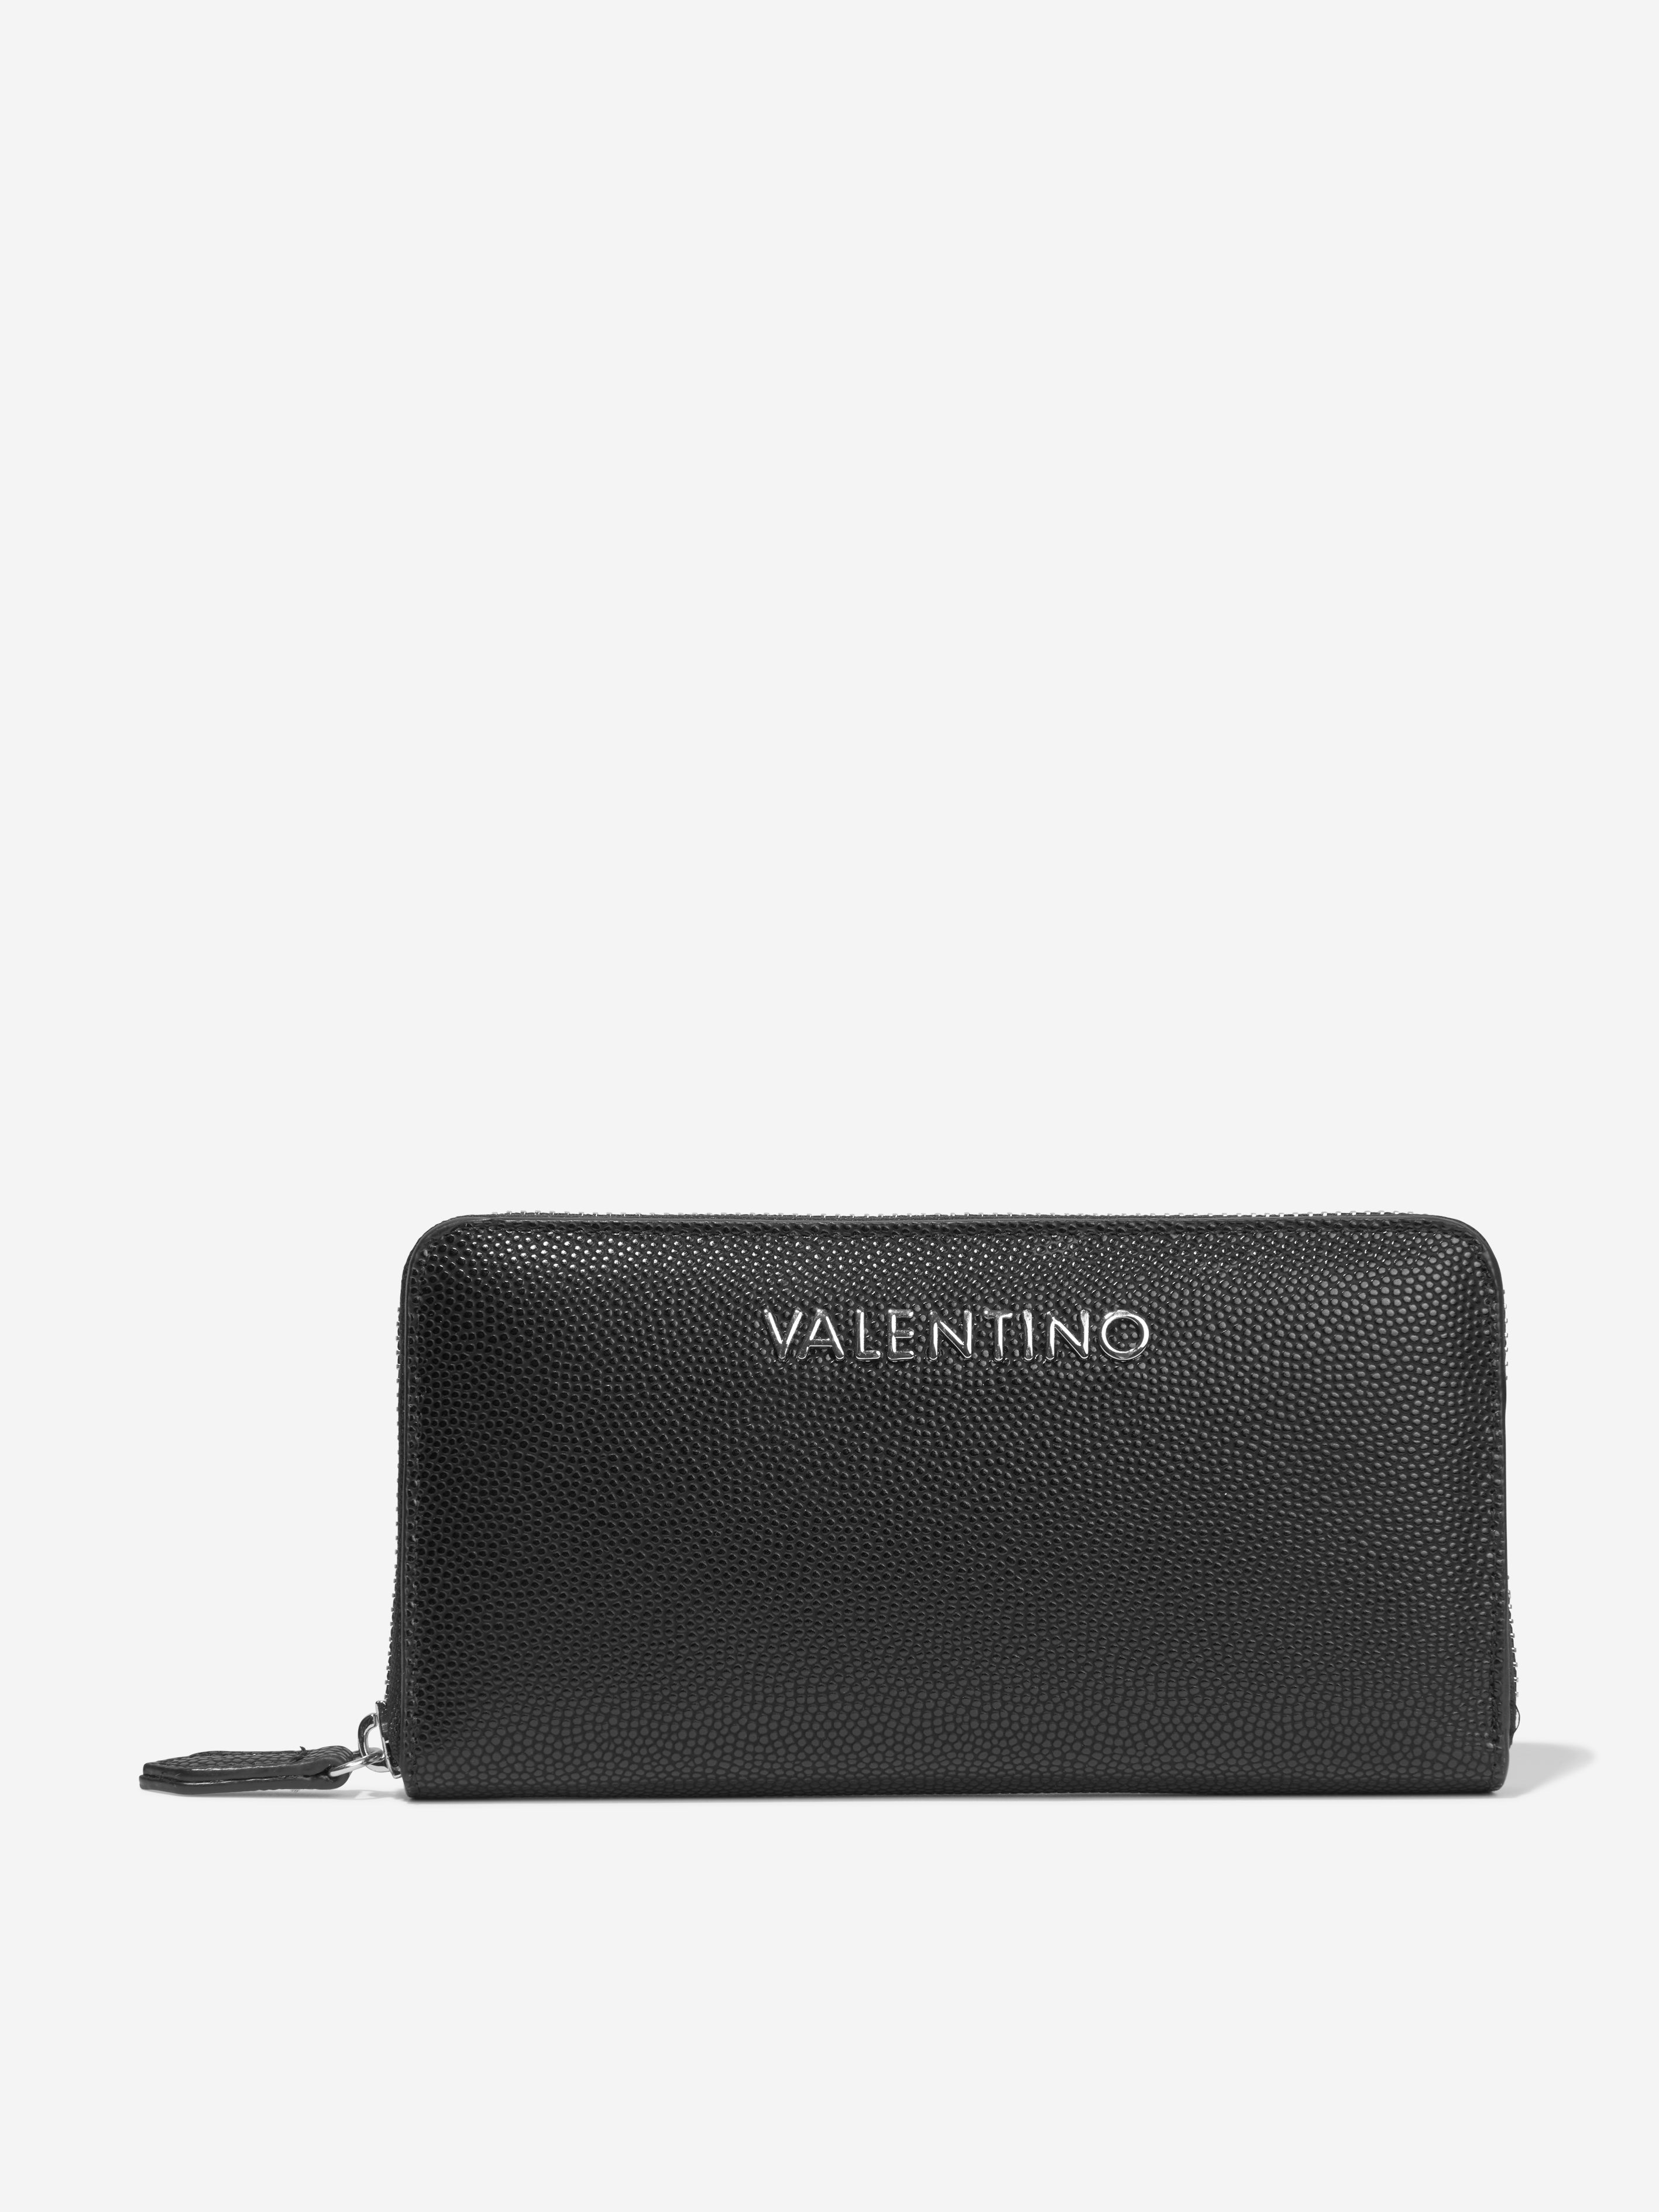 Valentino Girls Divina Pochette Bag in Silver